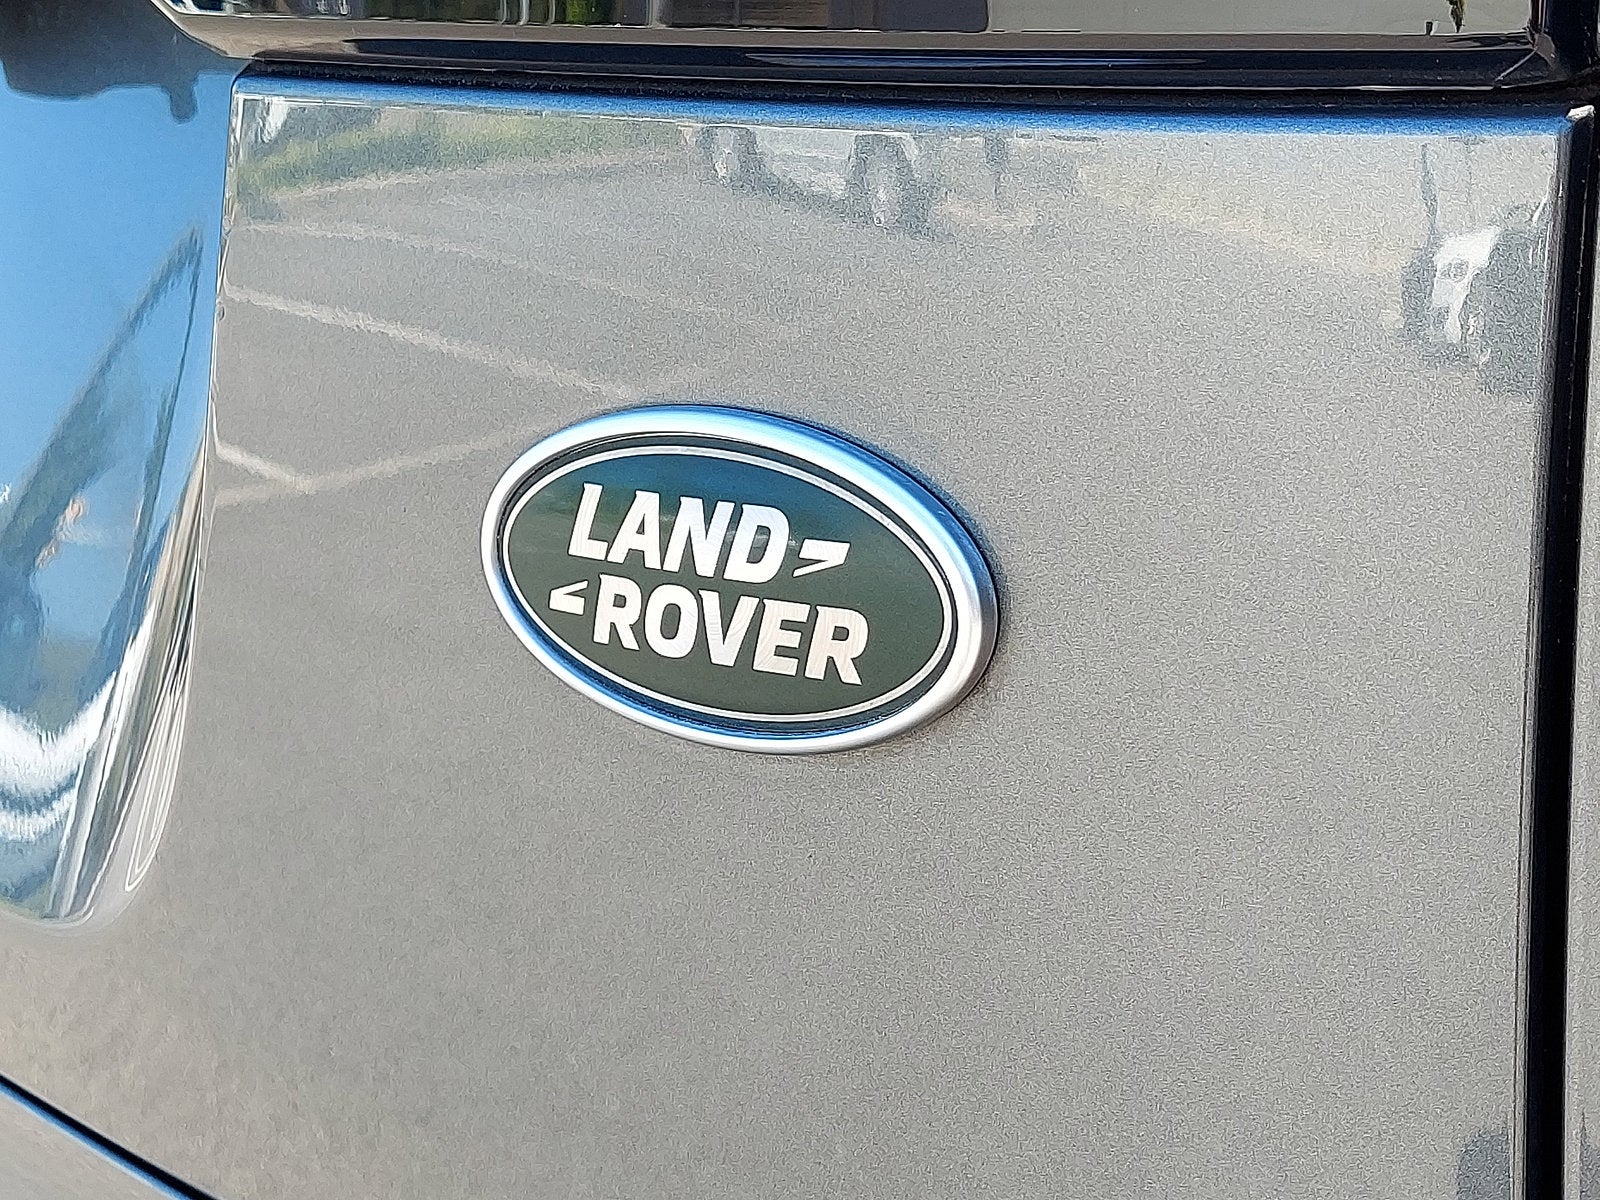 2019 Land Rover Range Rover Velar R-Dynamic HSE